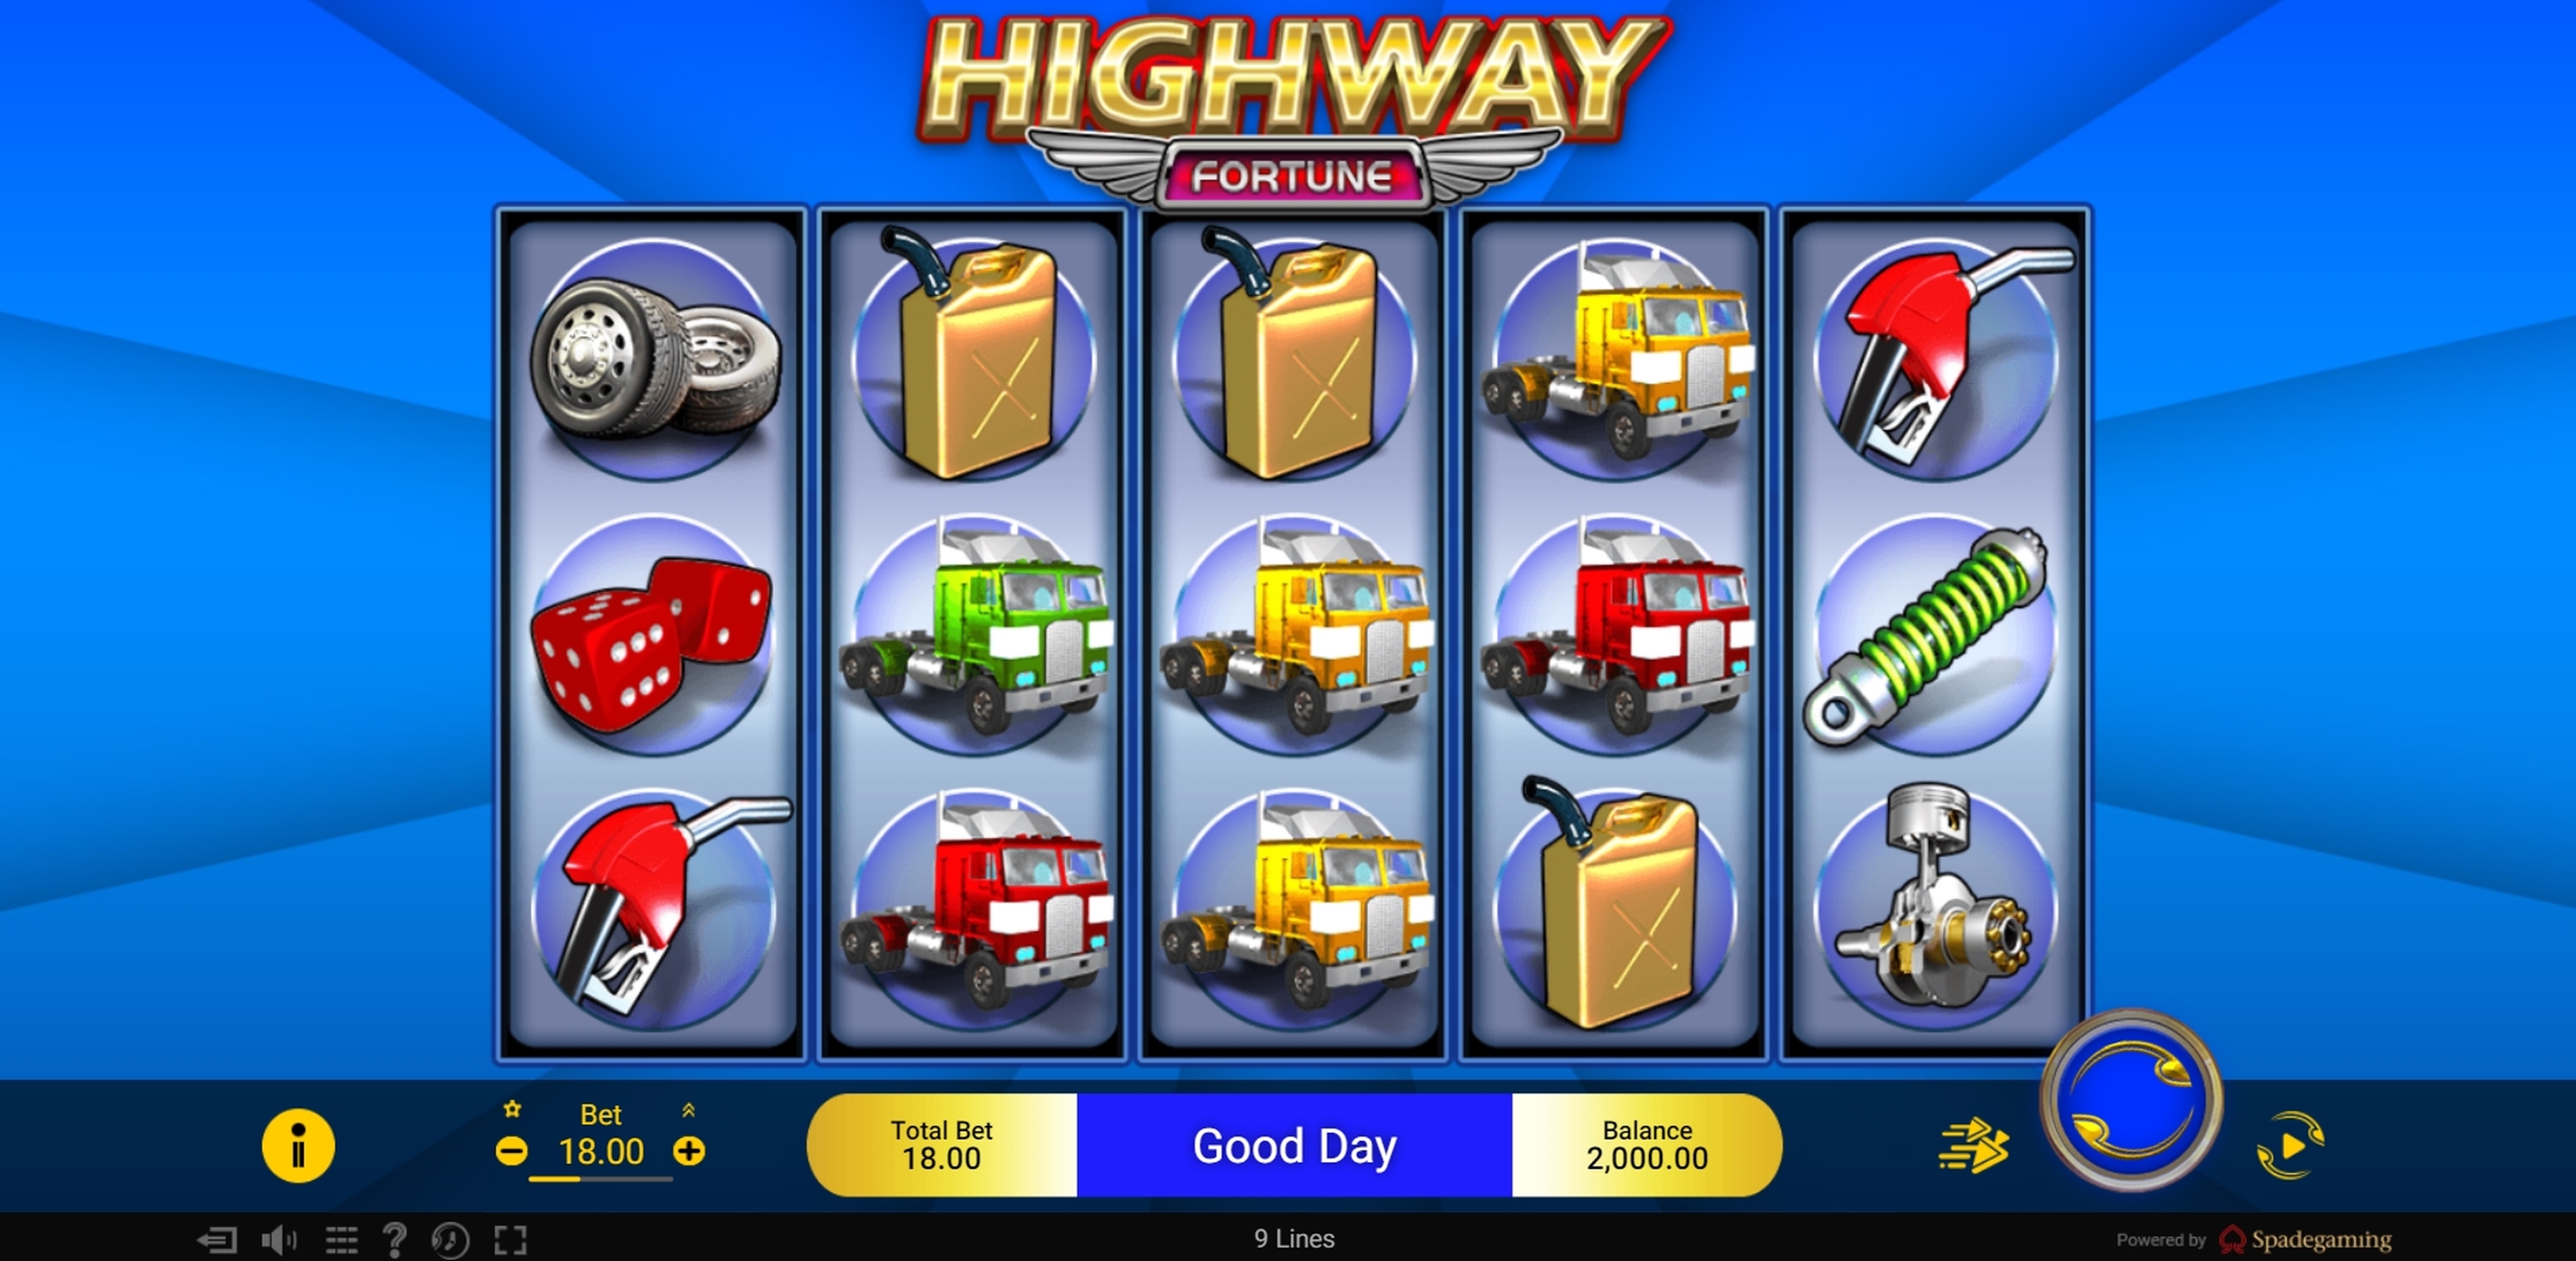 Reels in Highway Fortune Slot Game by Spade Gaming